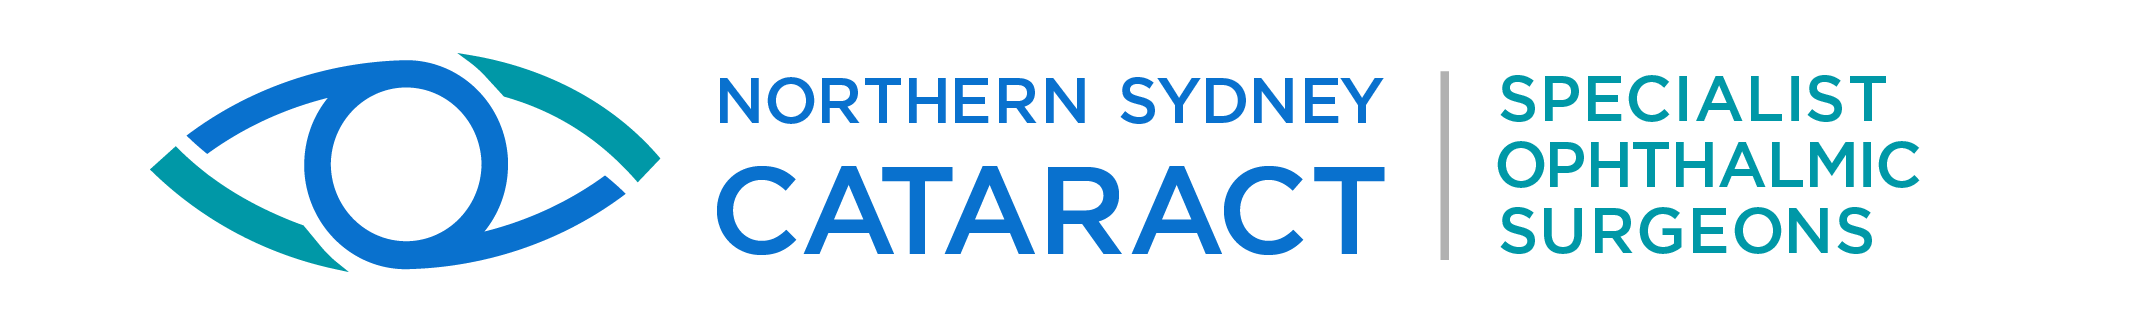 Northern Sydney Cataract